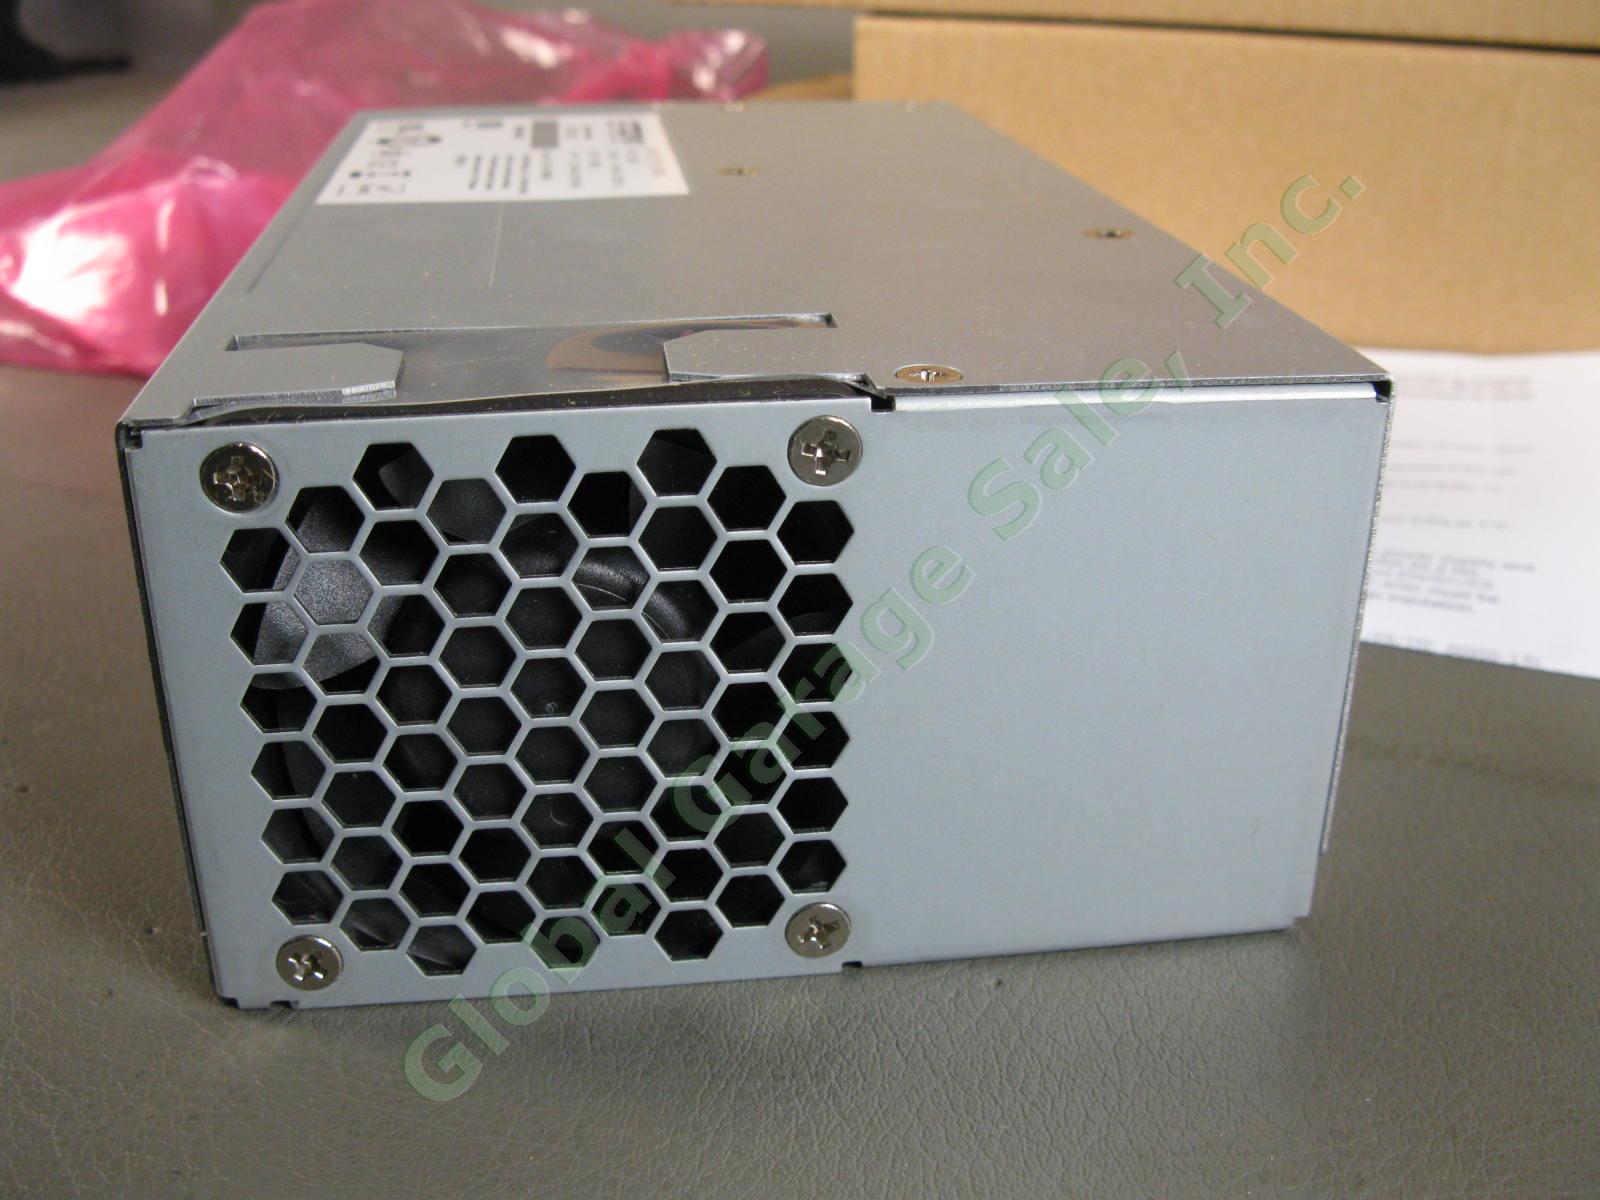 5pc LOT Artesyn Power Supply LCM600Q 100-240V 8.5A Max Input 24V 27A 600W Output 4